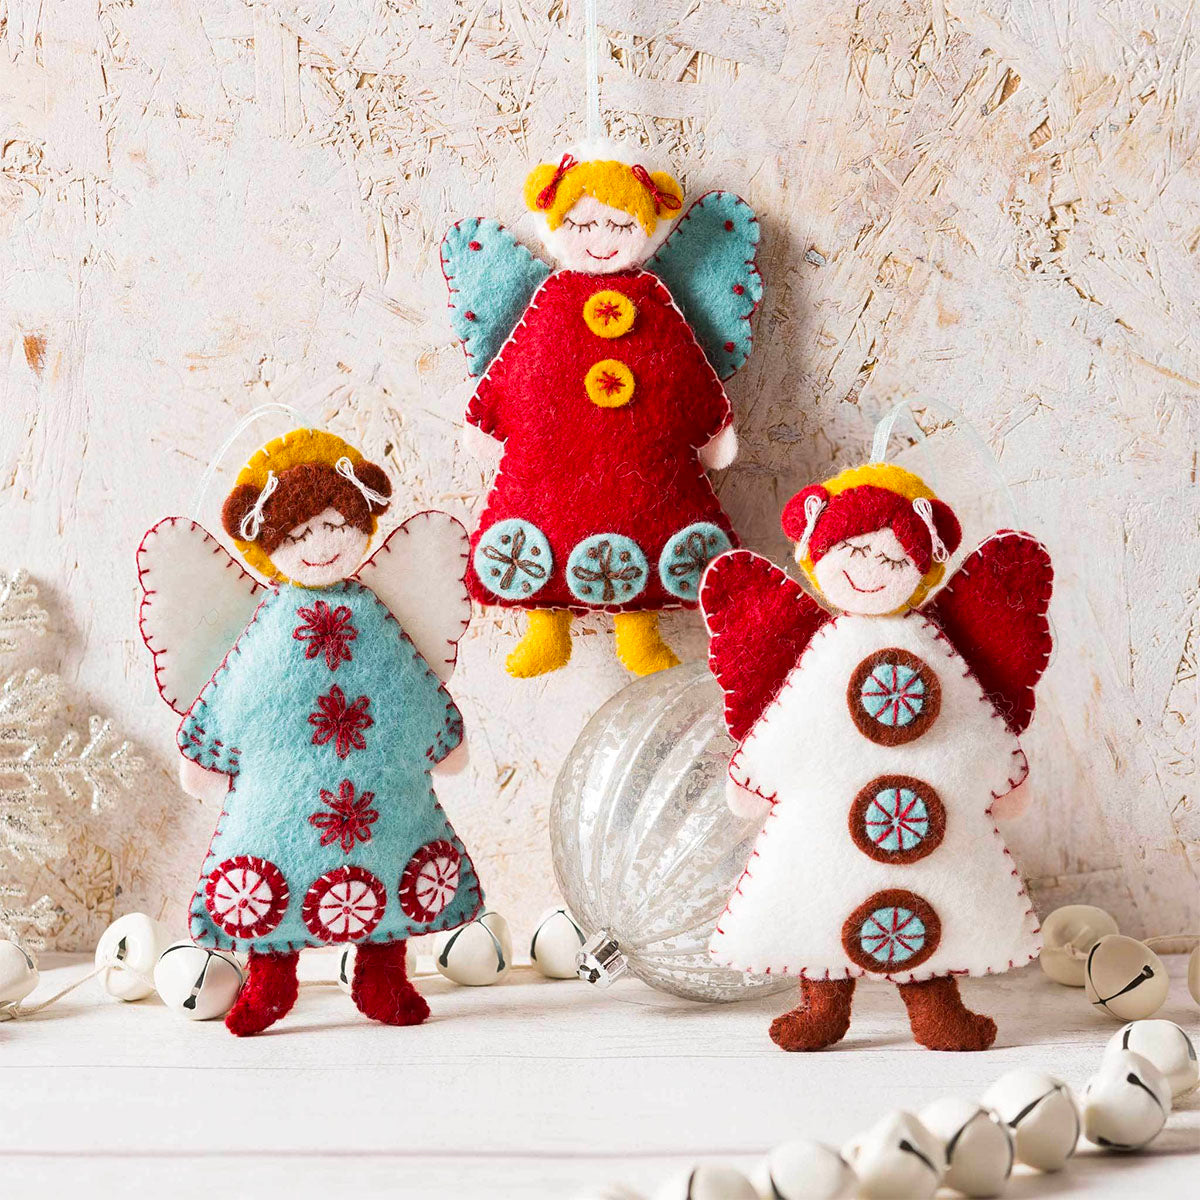 Vogart Vintage Crafts Christmas Crochet Kit Girl Angel 3206 Sealed